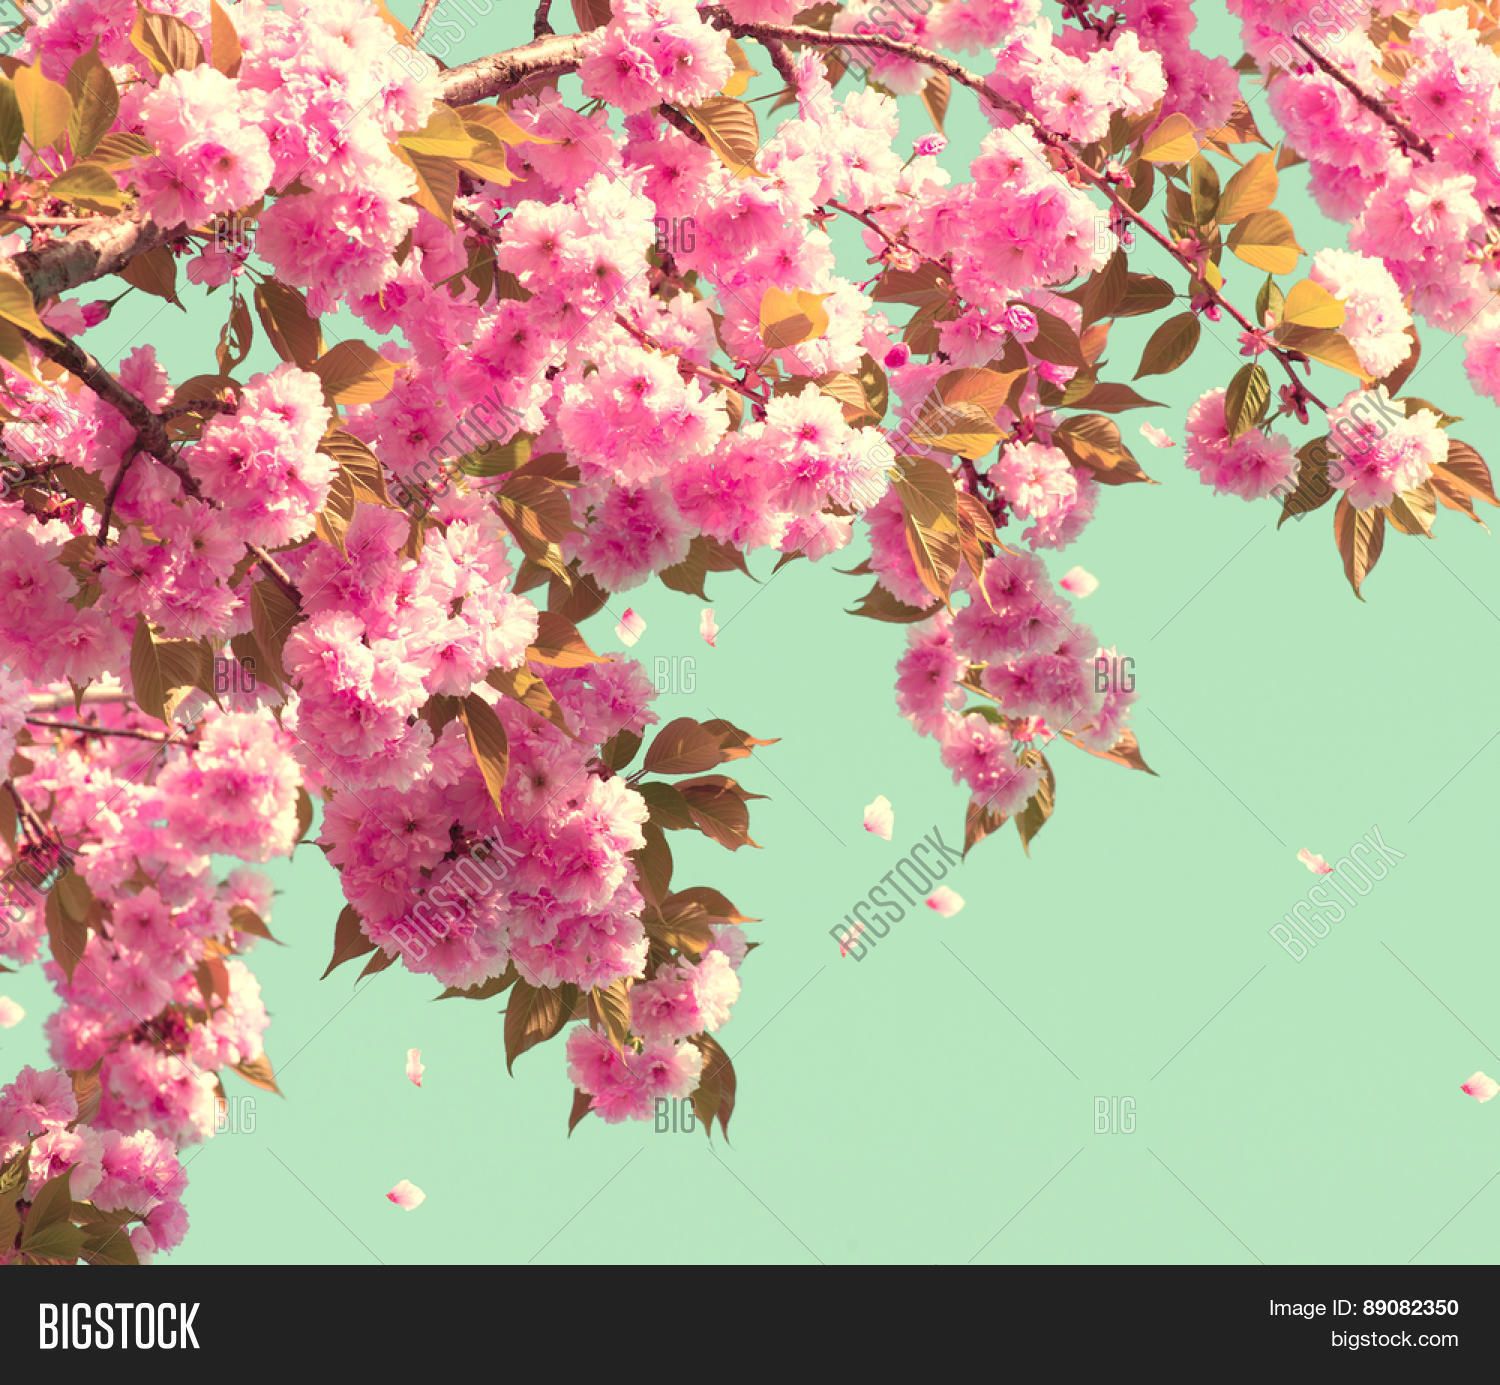 Spring Blossom Background. Image & Photo | Bigstock